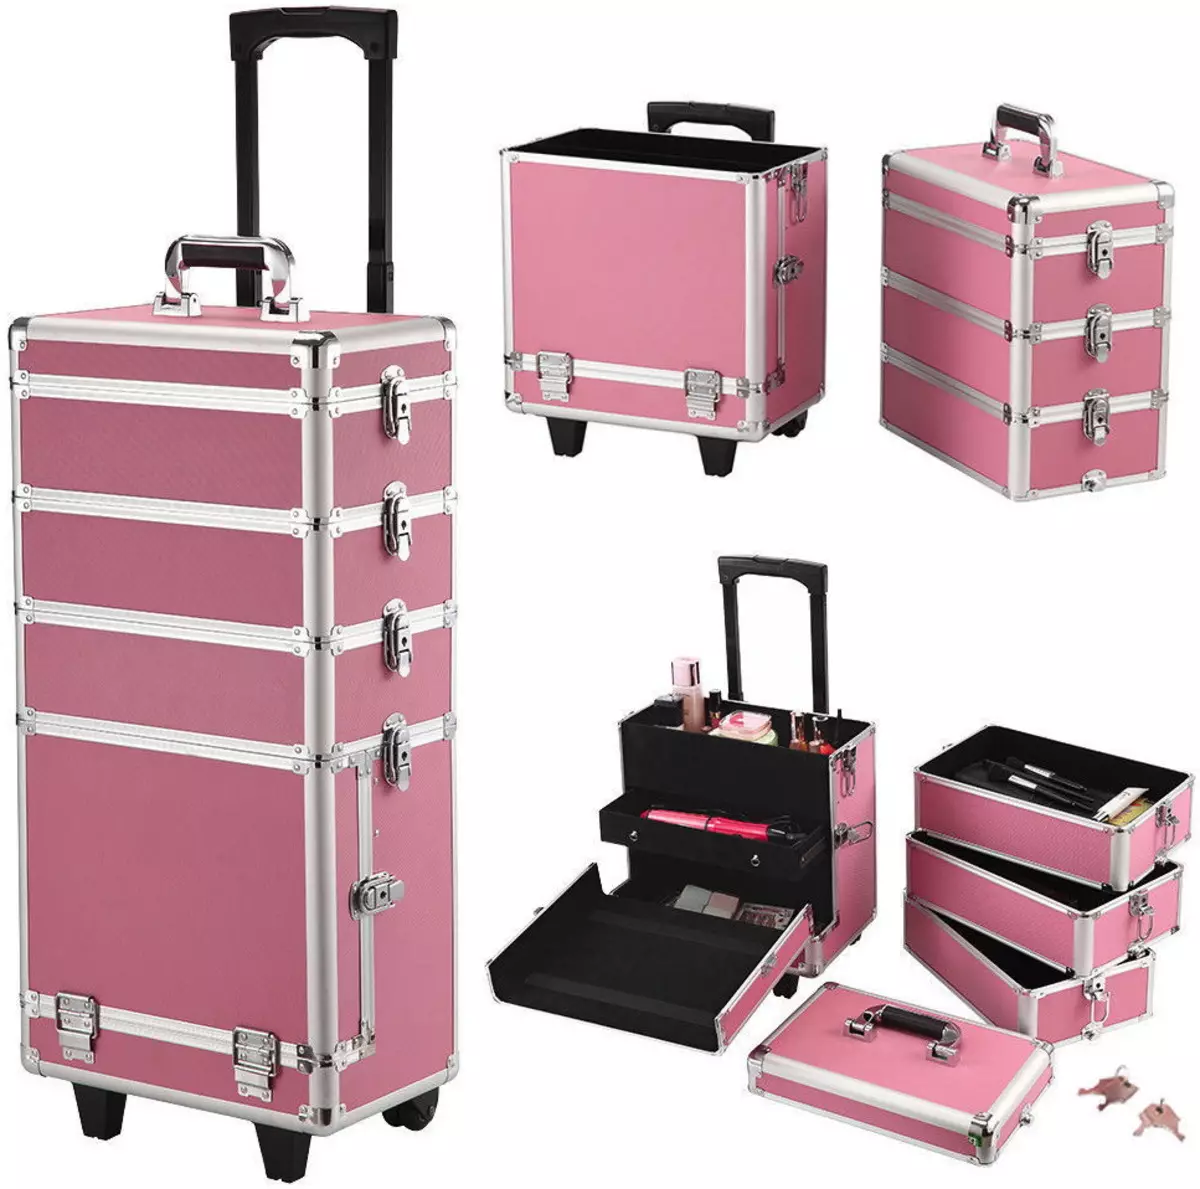 Kozmetički slučajevi (60 fotografija): kovčege na kotačima, torbi i drugoj pohranjivanju kozmetike ljepote. Izbor profesionalnih kozmetičkih slučajeva 4364_30